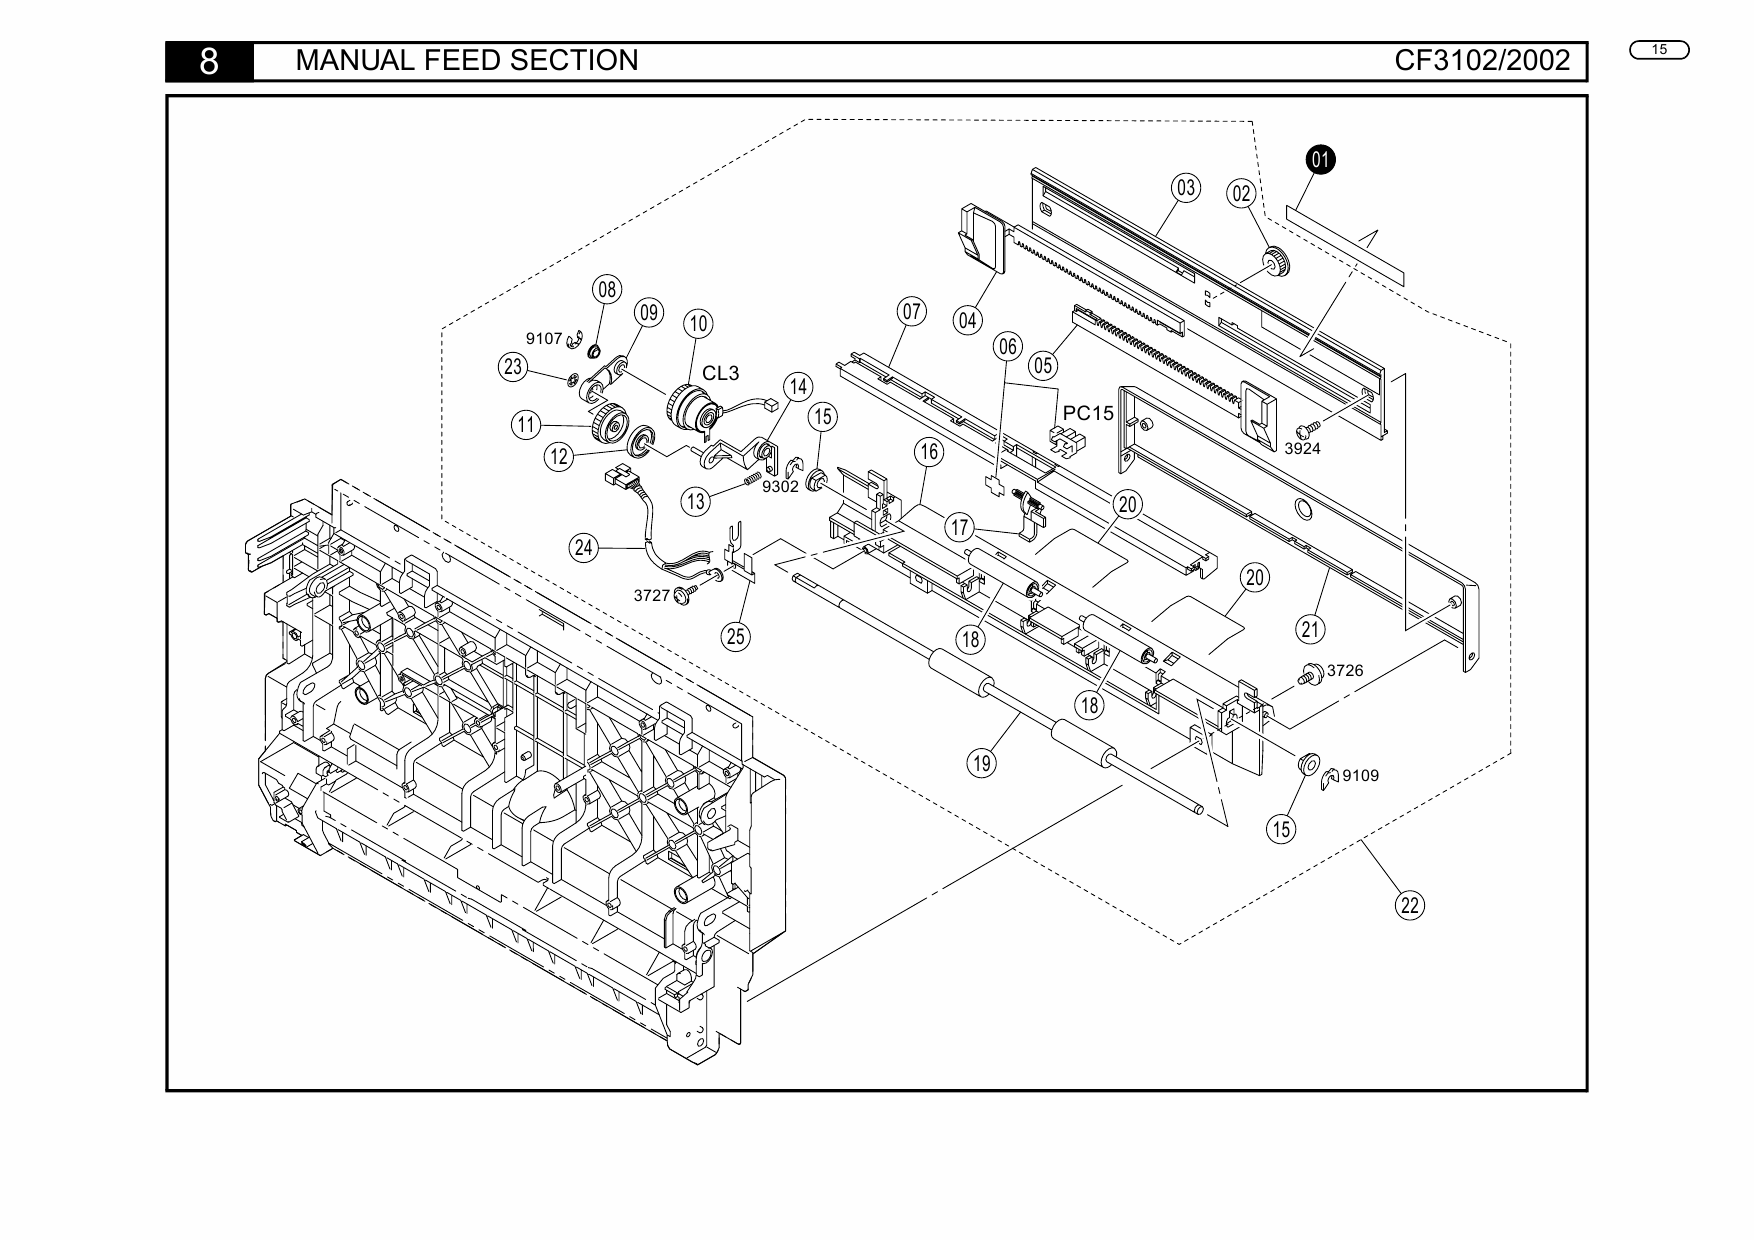 Konica-Minolta MINOLTA CF2002 3102 Parts Manual-2